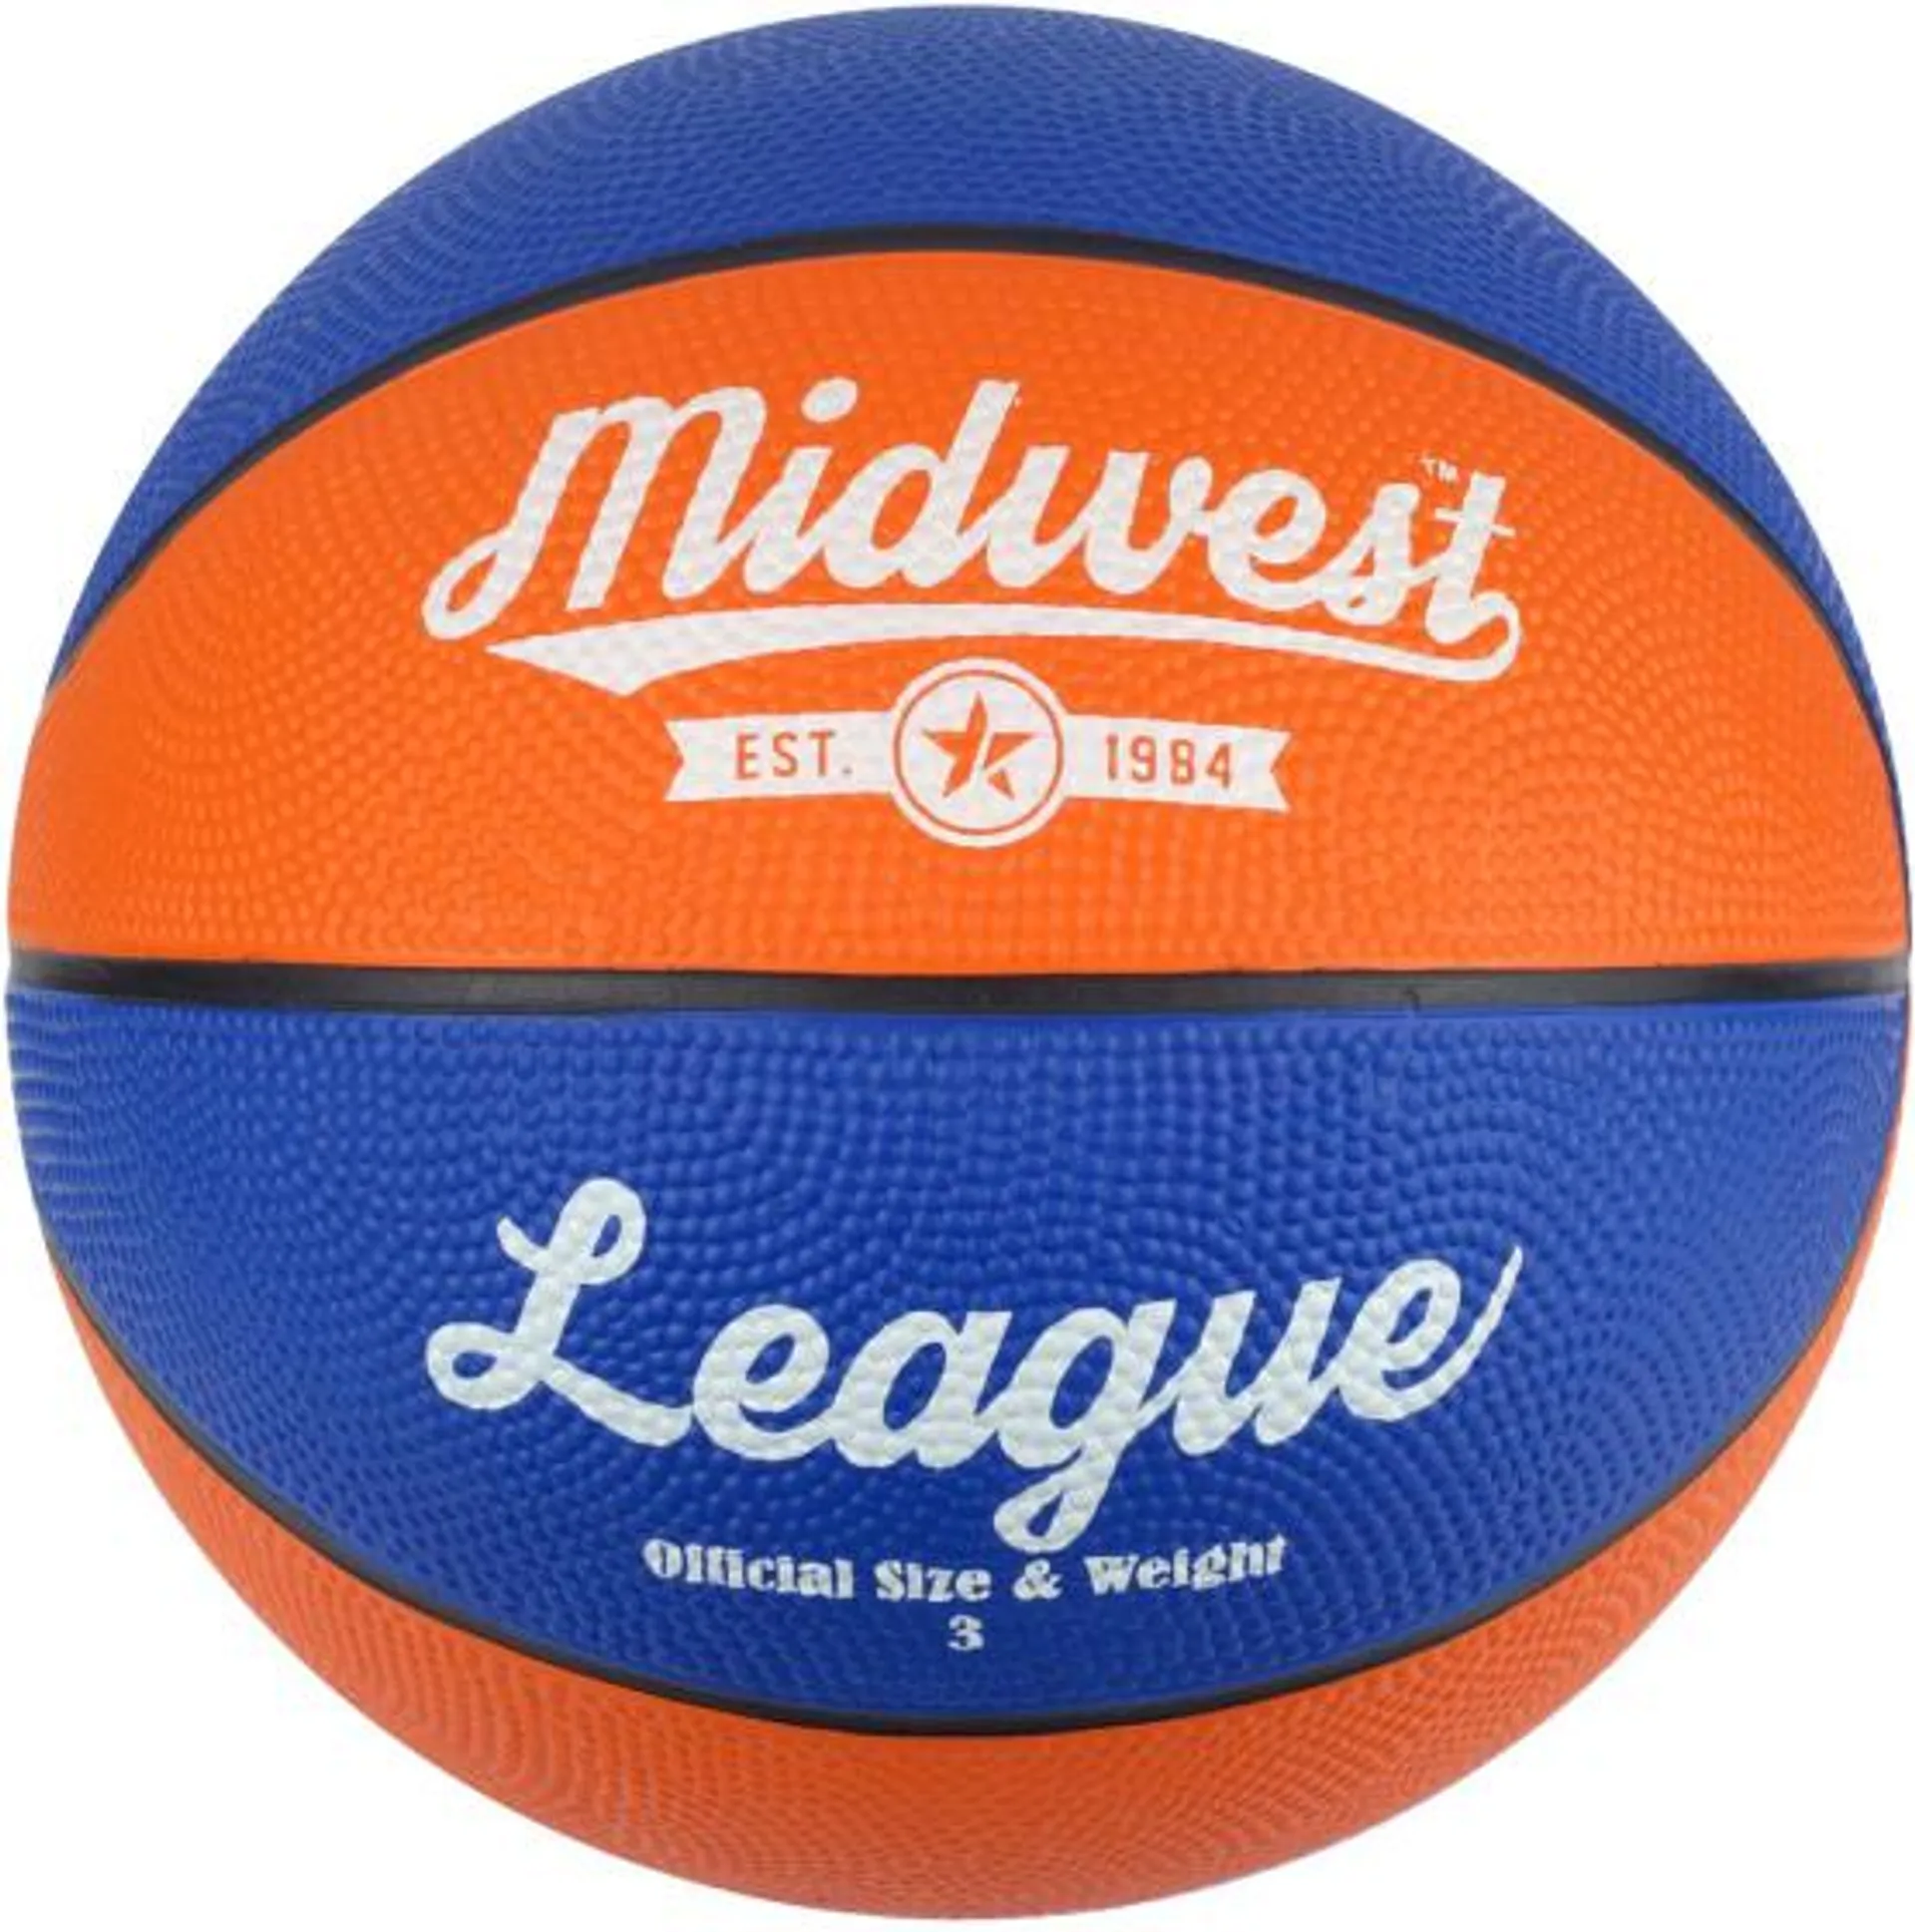 Midwest League Basketbal unisex blauw/oranje maat 7